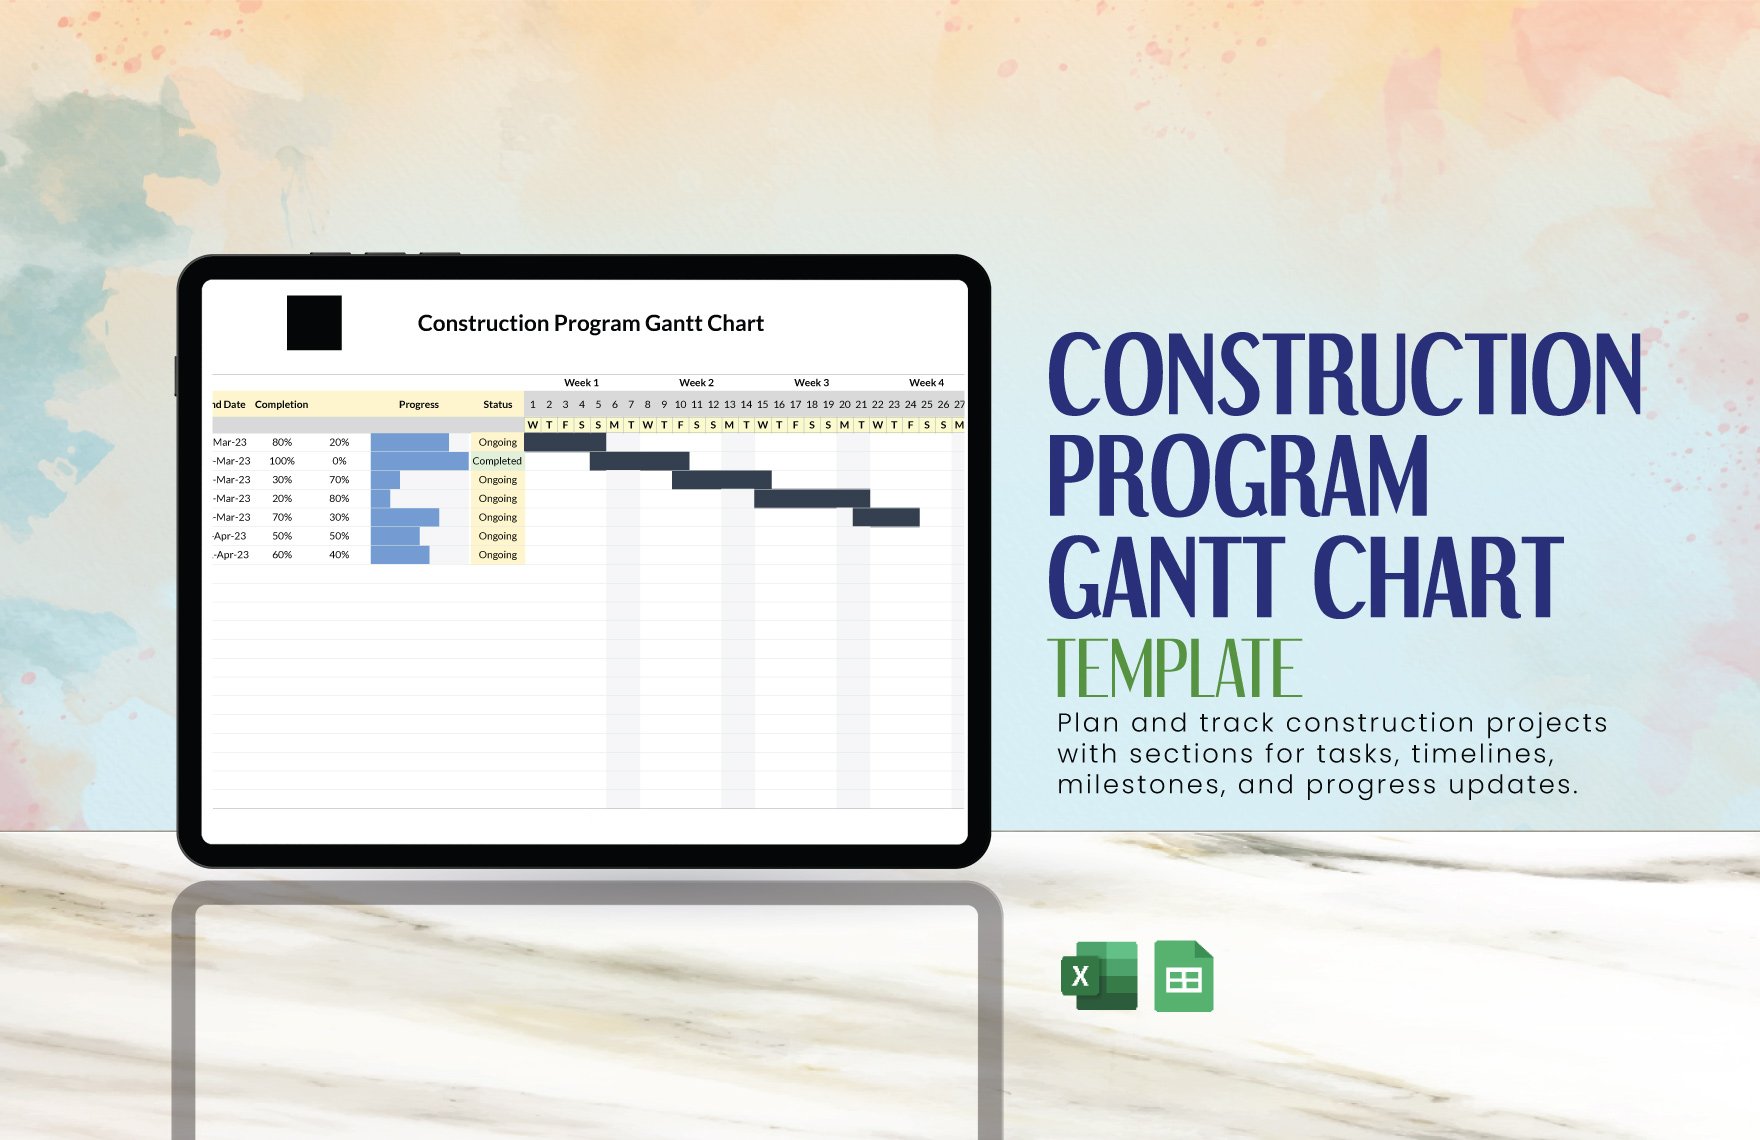 Construction Program Gantt Chart Template in Excel, Google Sheets